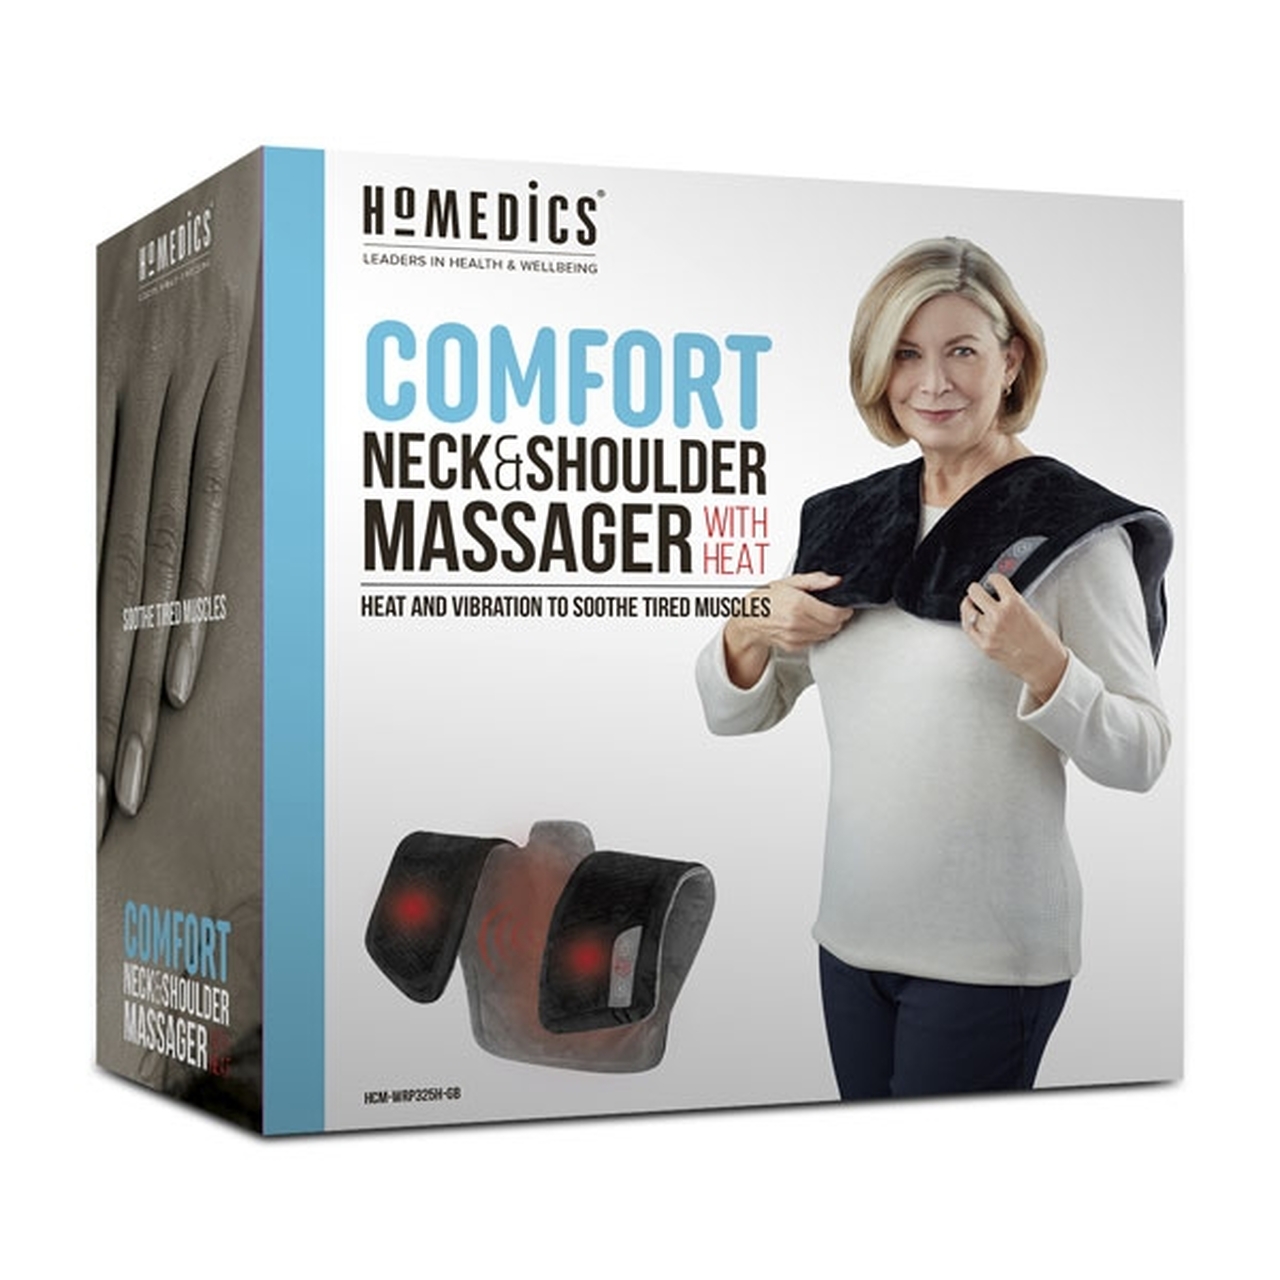 Homedics Comfort Pro Vibration Neck And Shoulder Massager With